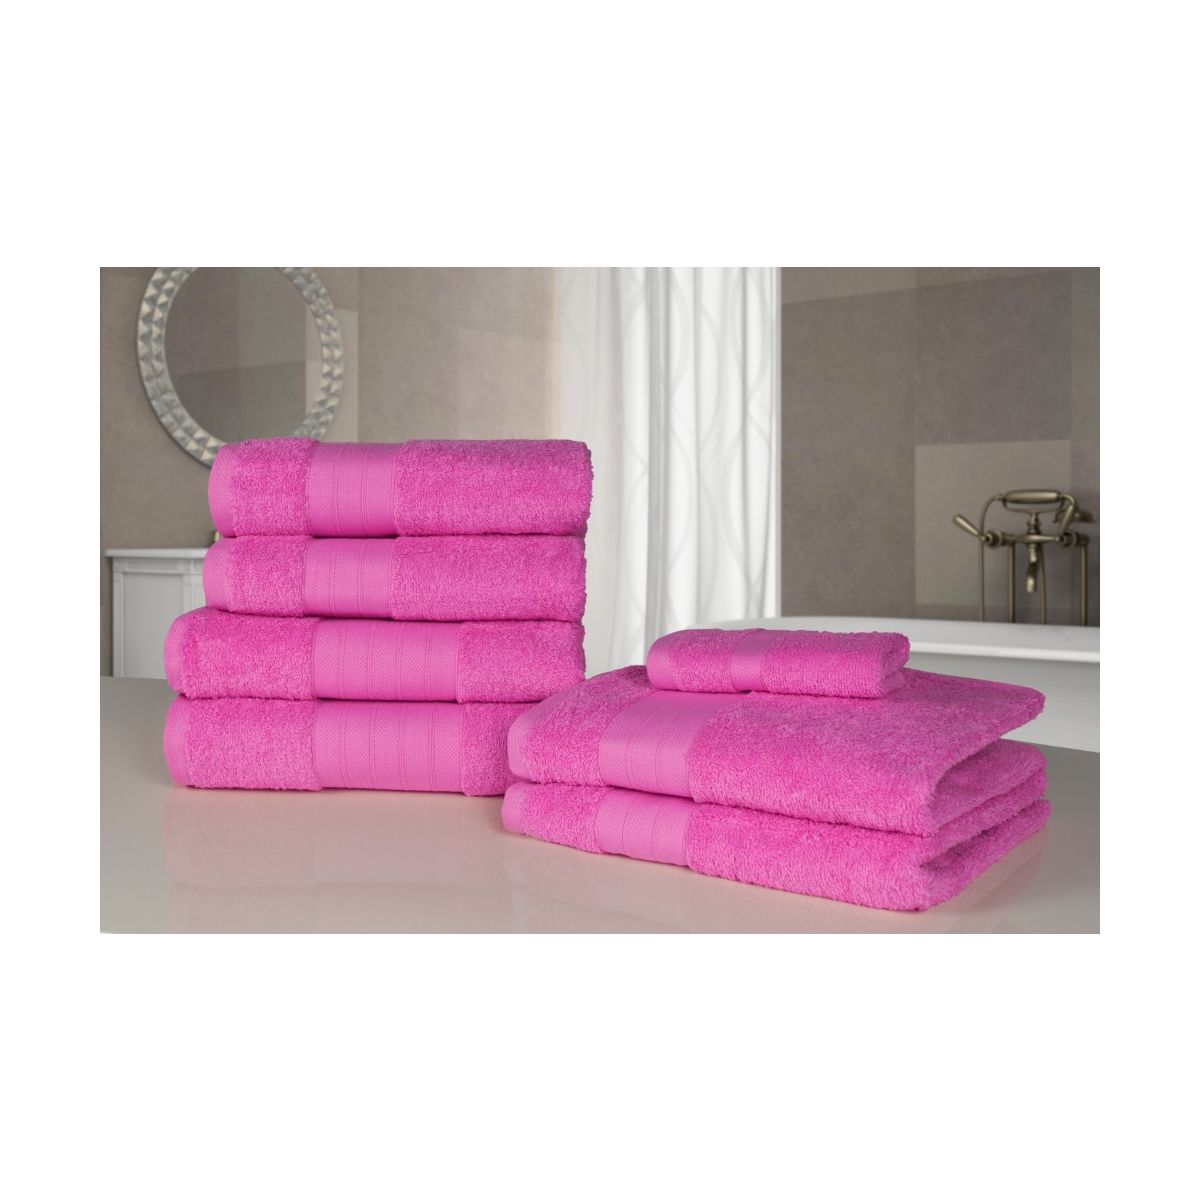 Dreamscene Towel Bale 7 Piece - Pink